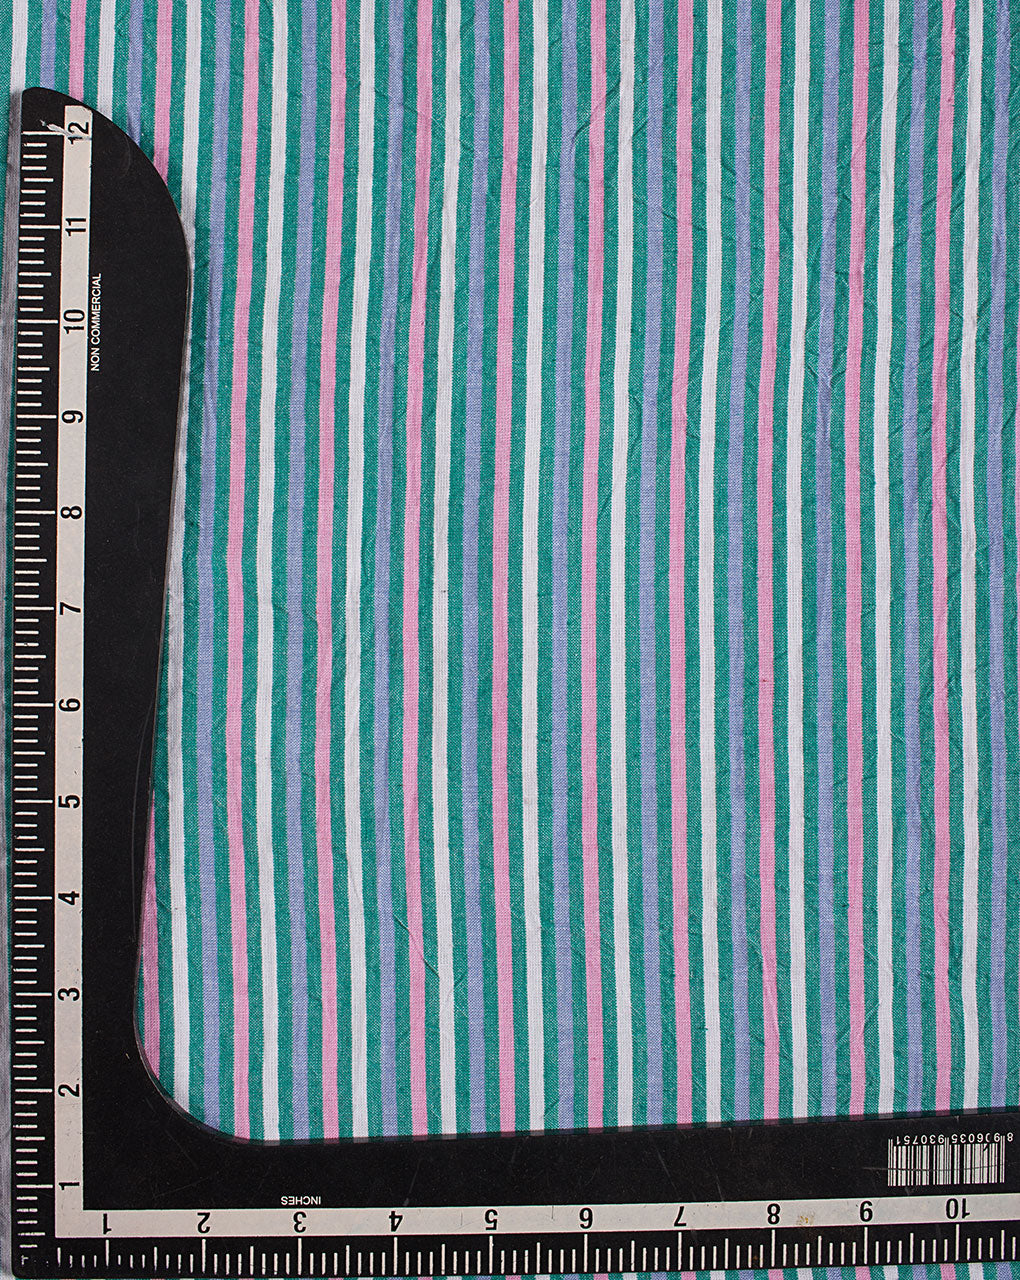 Seersucker Cotton Fabric - Fabriclore.com